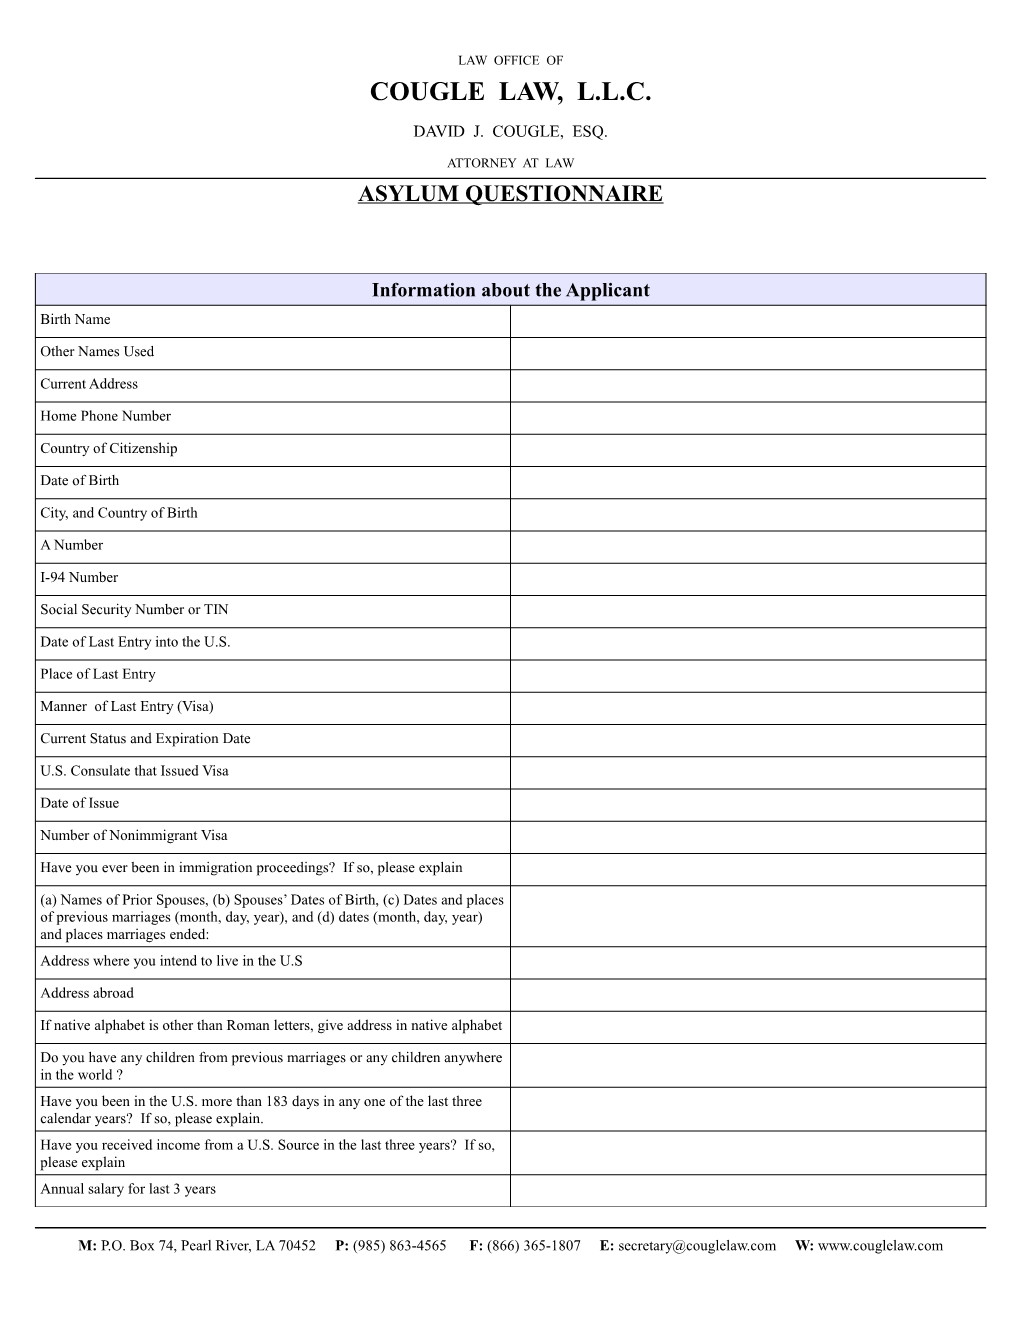 Asylum Questionnaire